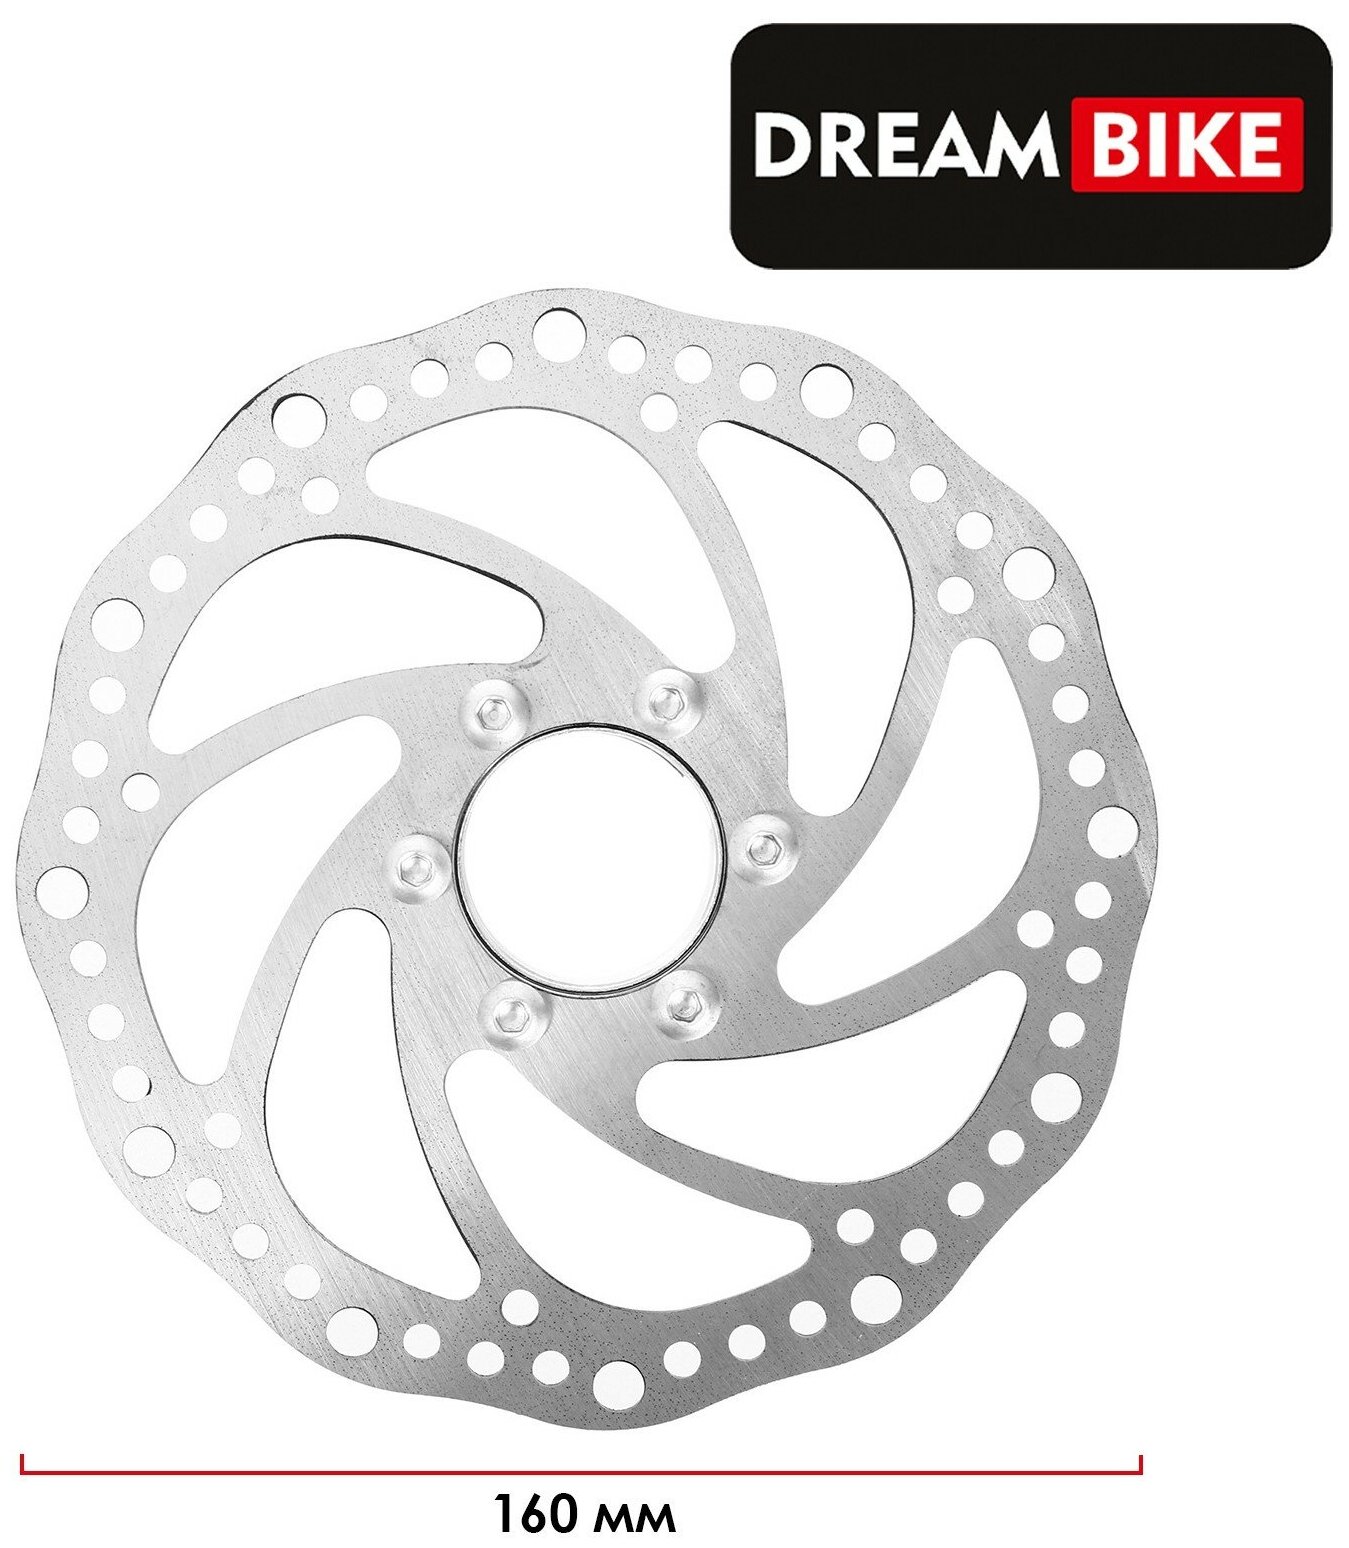 Тормозной диск Dream Bike, диаметр 160 мм, цвет серебристый